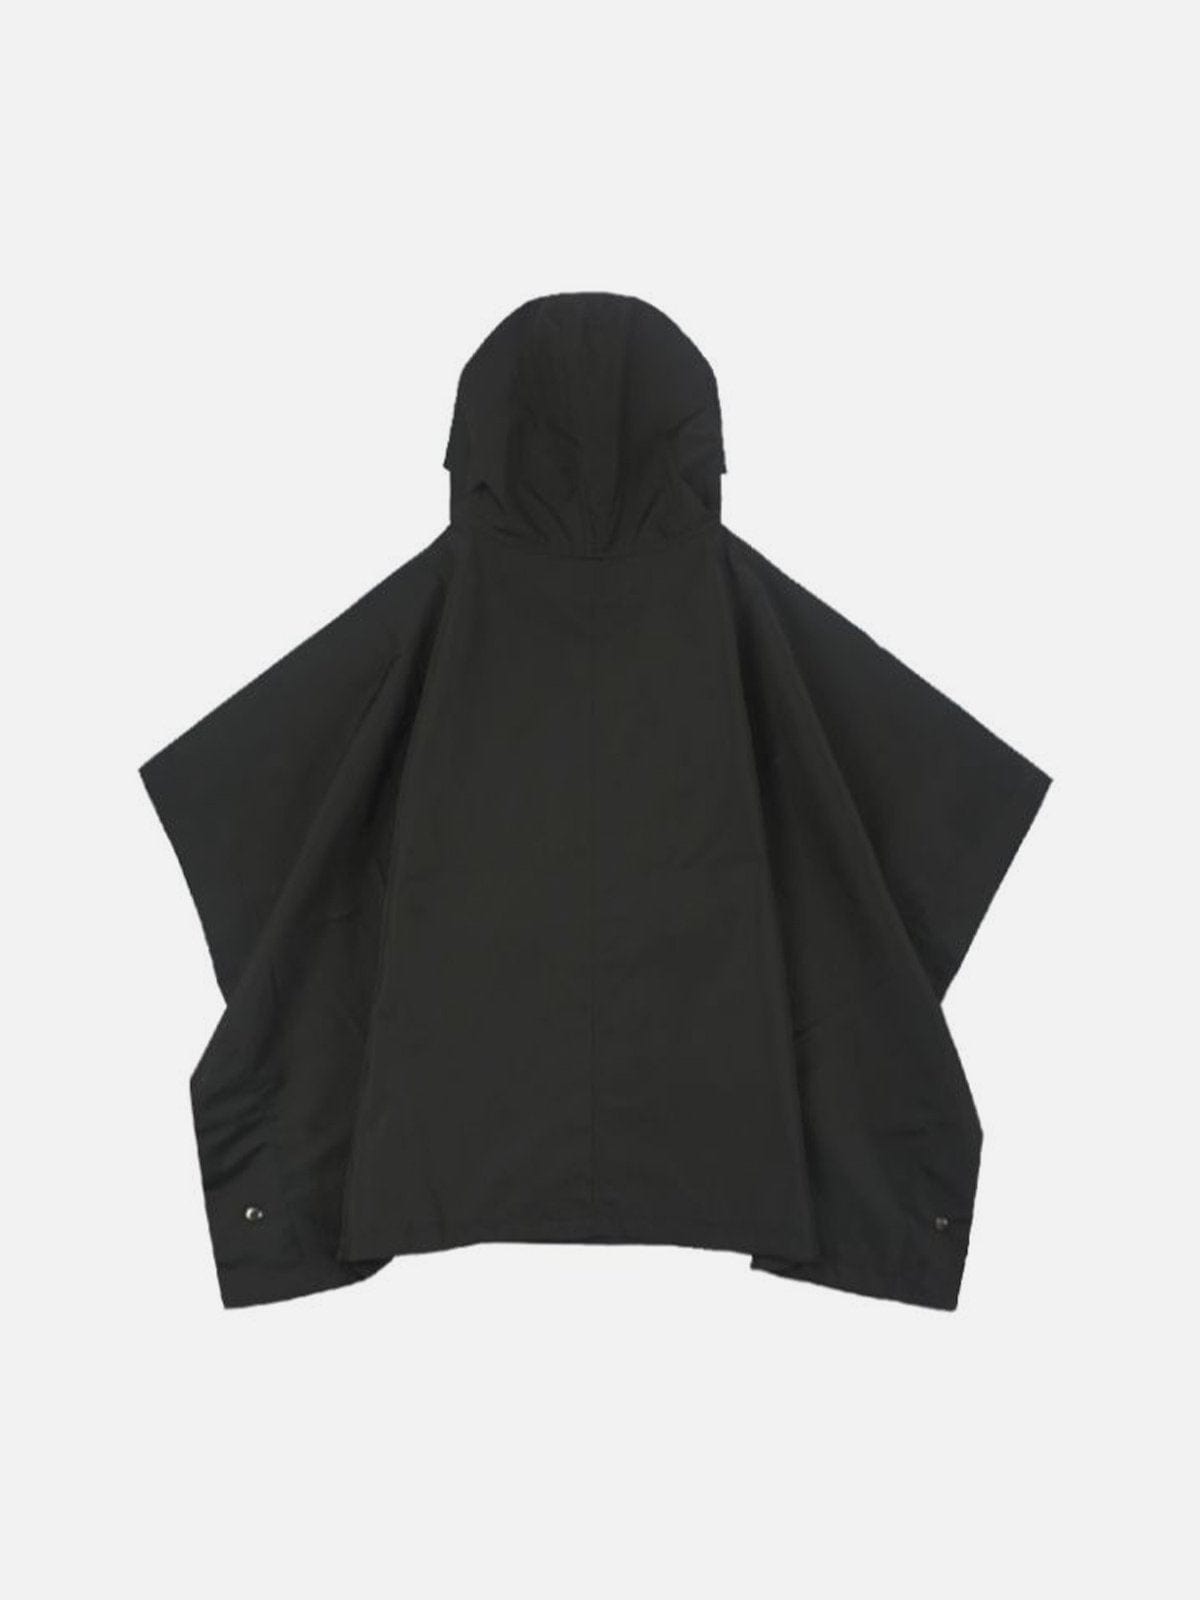 Dark Ninja Cape Streetwear Brand Techwear Combat Tactical YUGEN THEORY